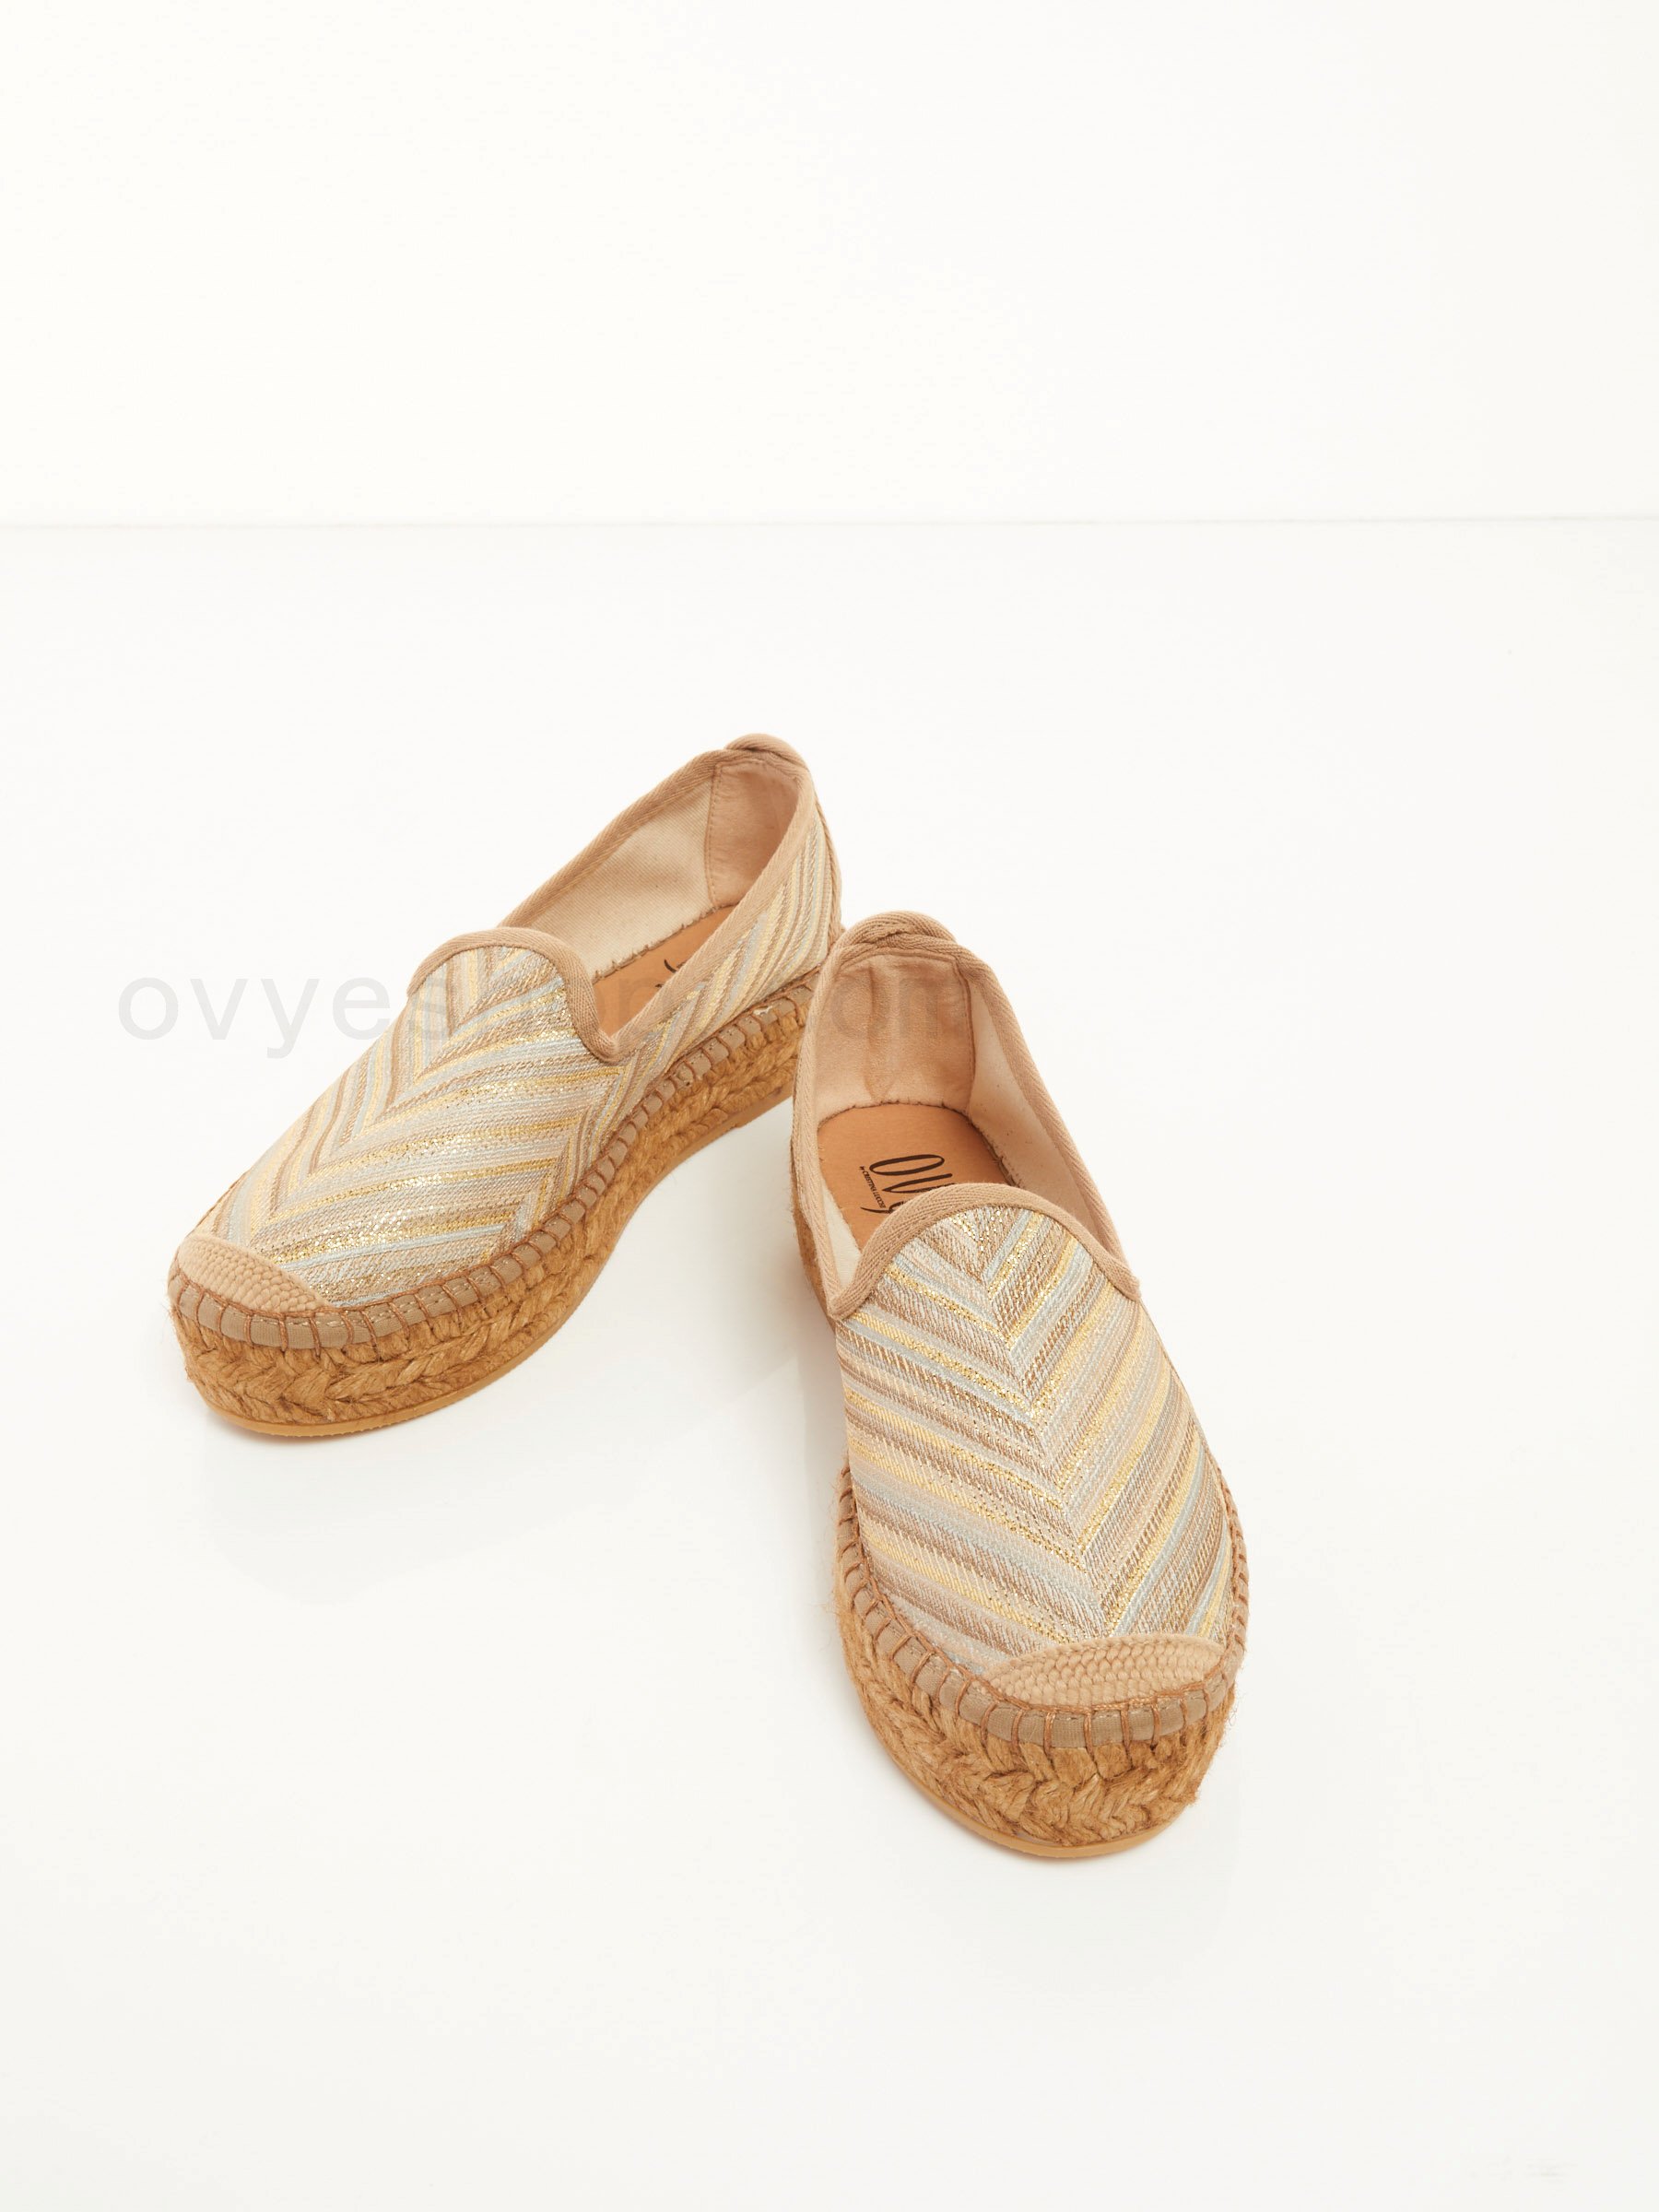 ovye scarpe Fabric Espadrillas F0817885-0790 85% Codice Sconto